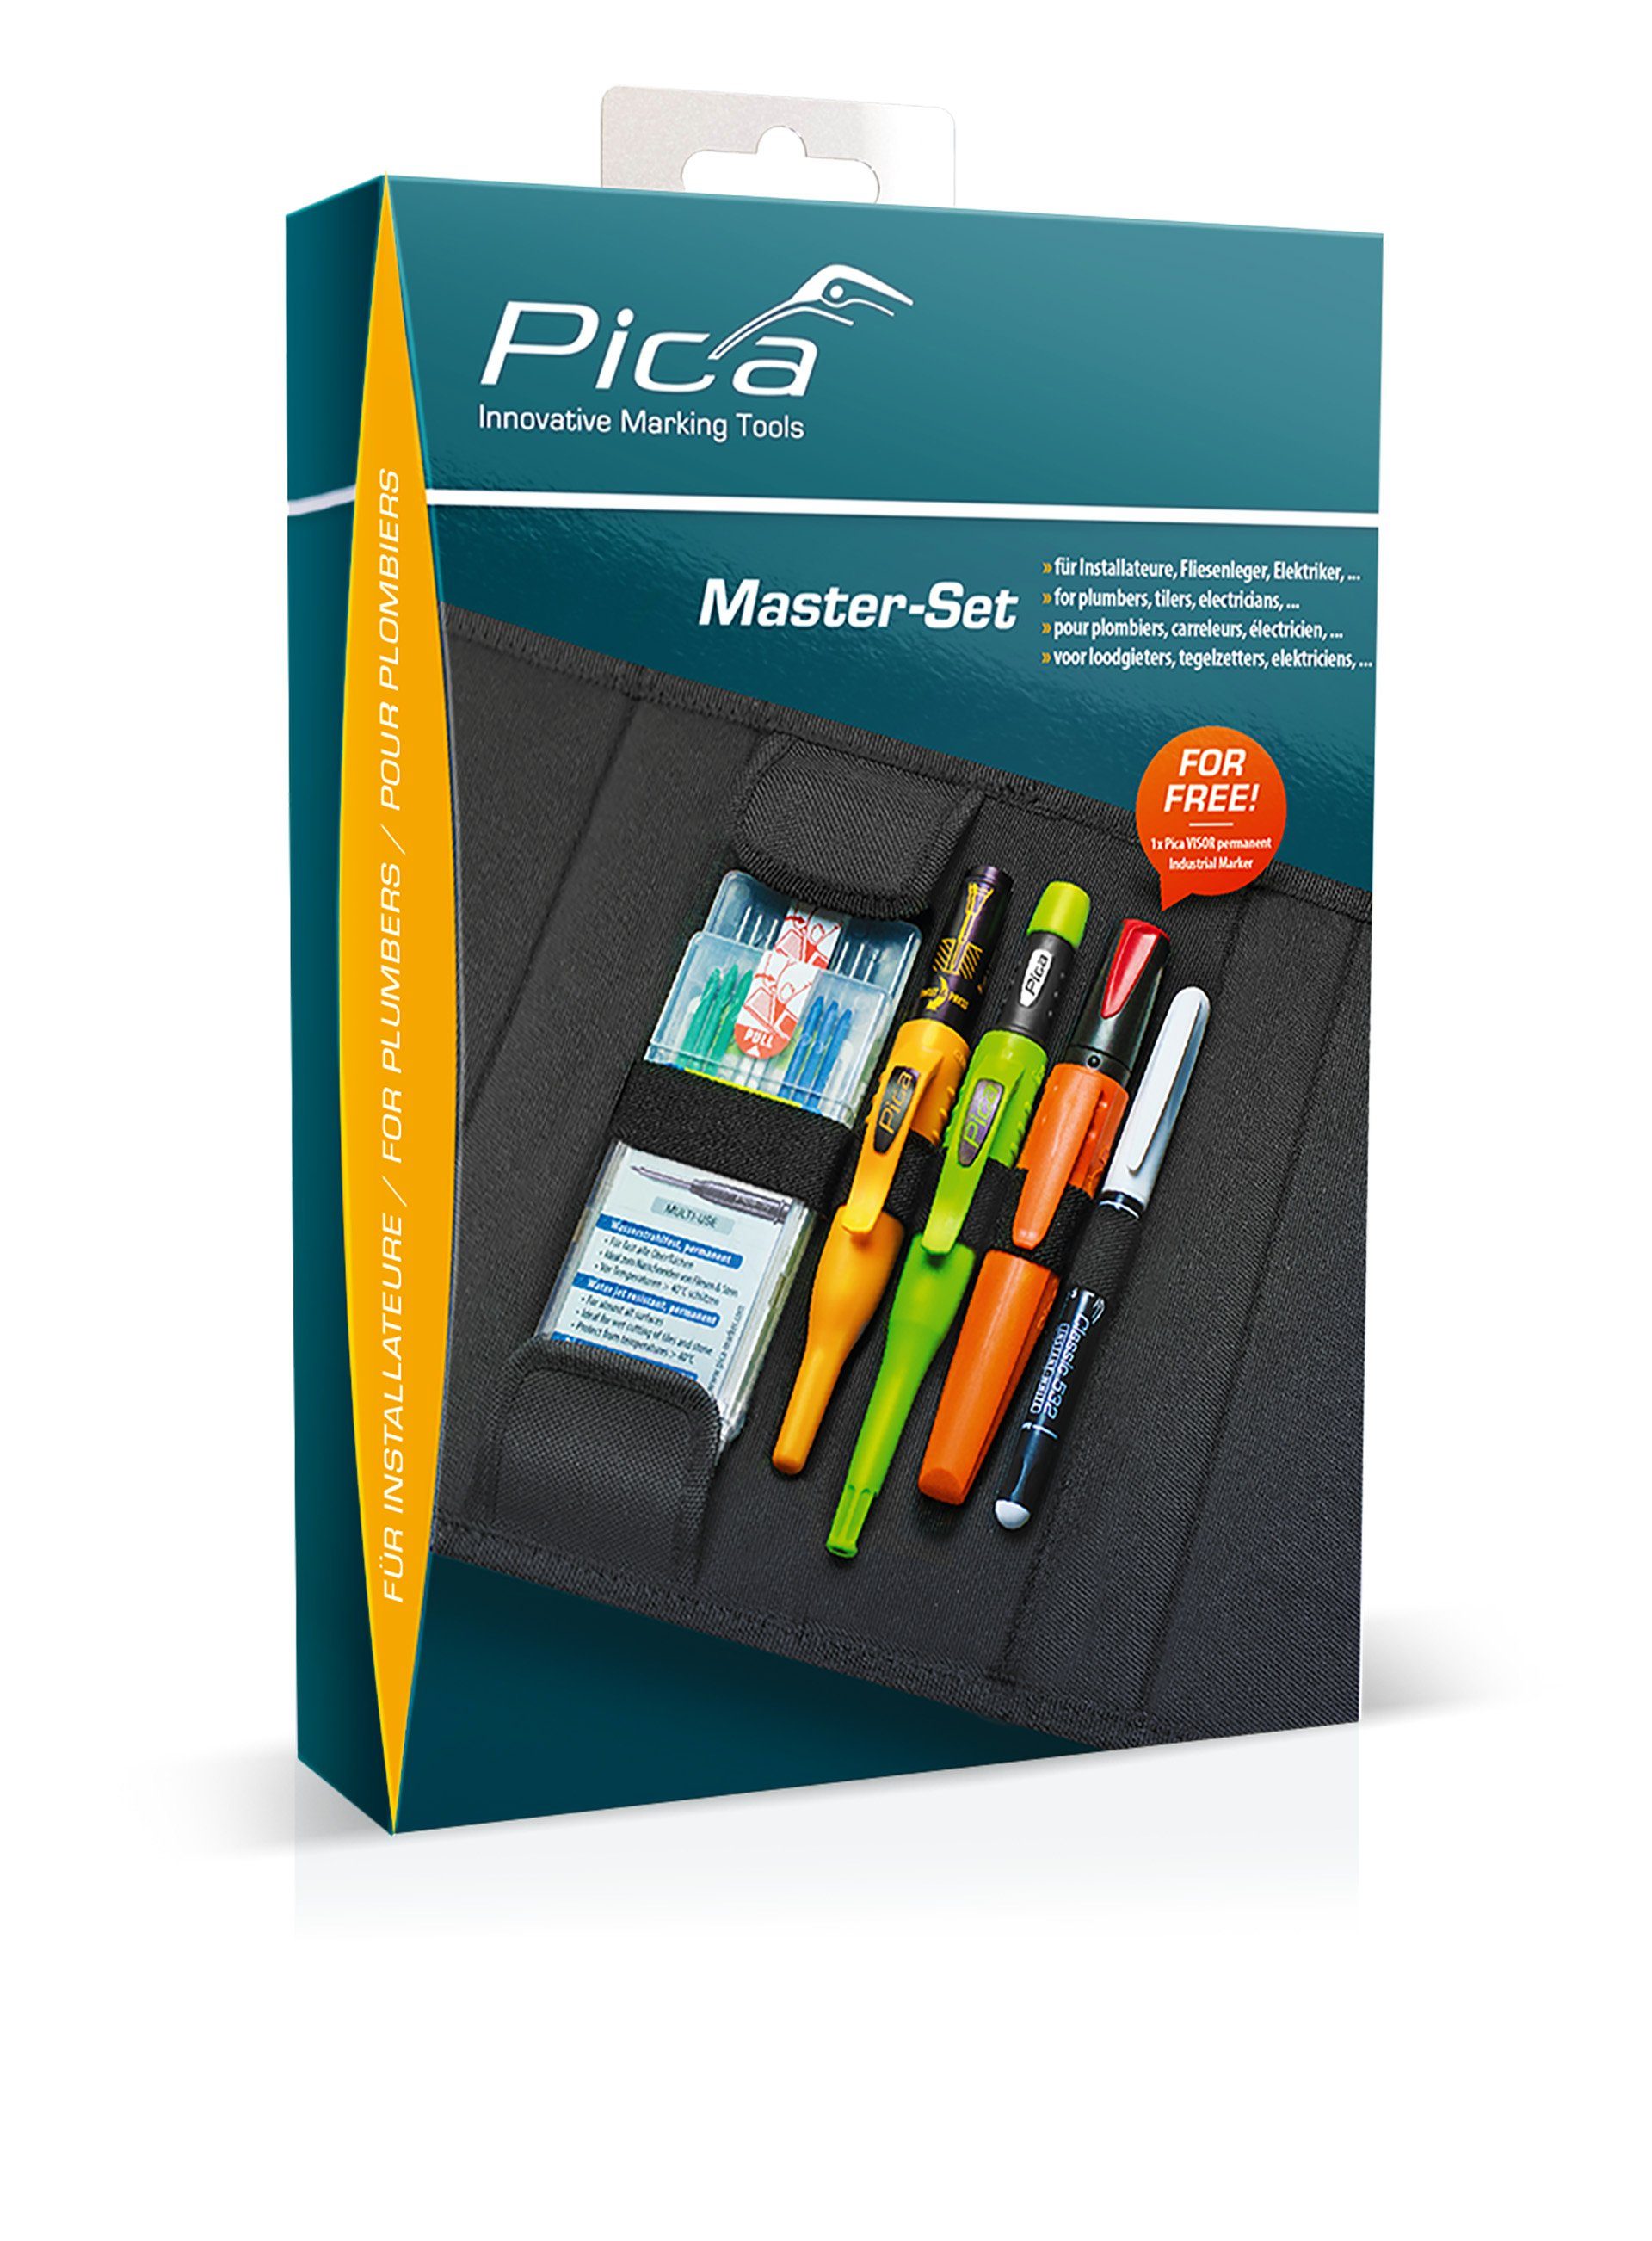 + Tieflochmarker Minen Marker Pica Set + Dry Ink Pica Pica-Marker Master + Visor Installateur